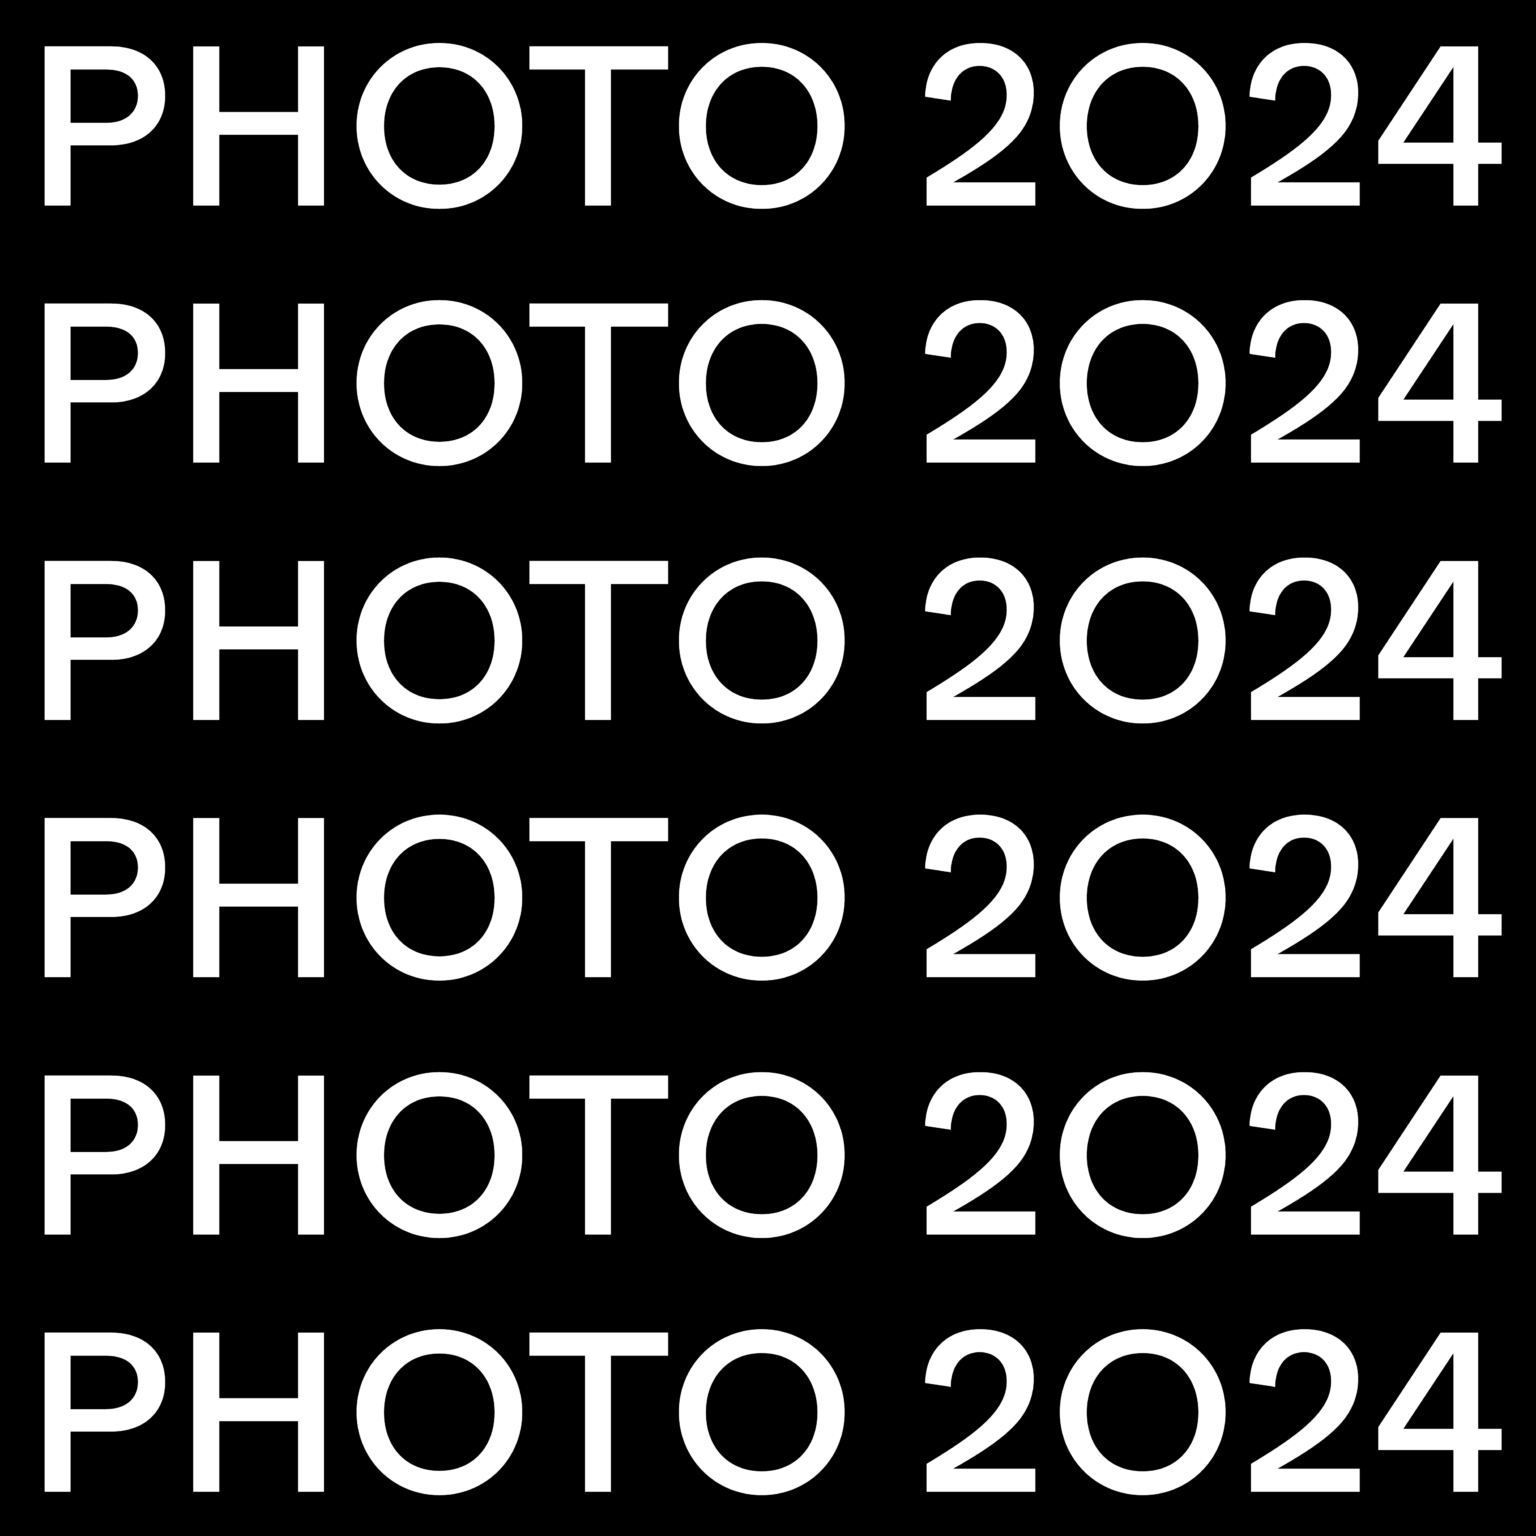 PHOTO 2024 Dates Announced PHOTO 2024